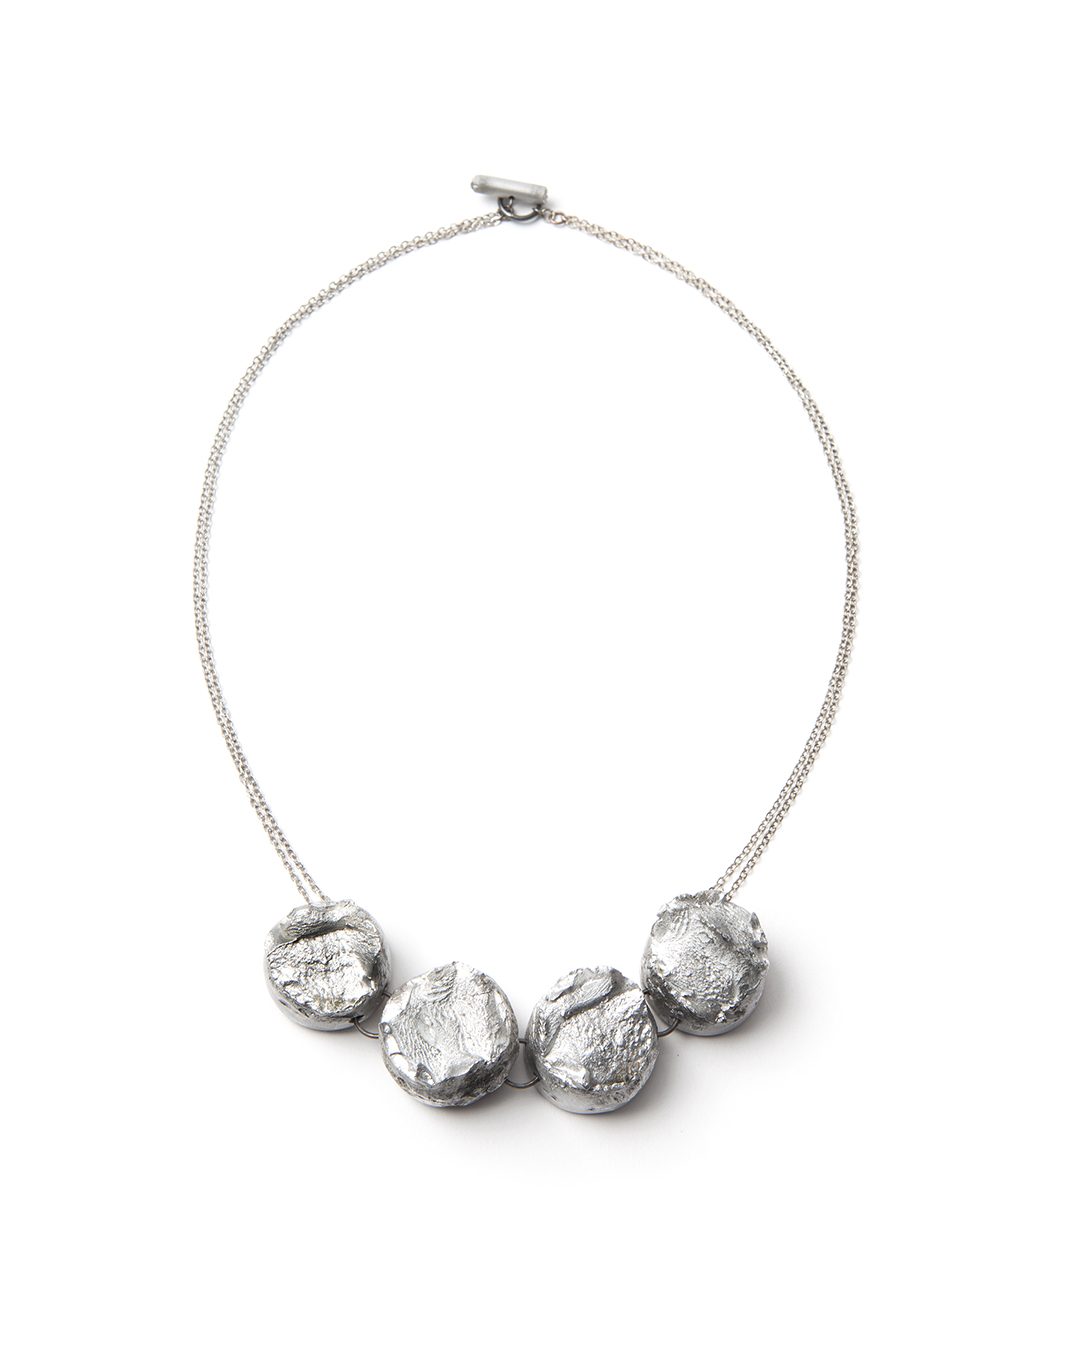 Barbara Schrobenhauser, Fractures I, 2015, necklace; aluminium, stainless steel, silver 450 x 20 x 18 mm, €1825